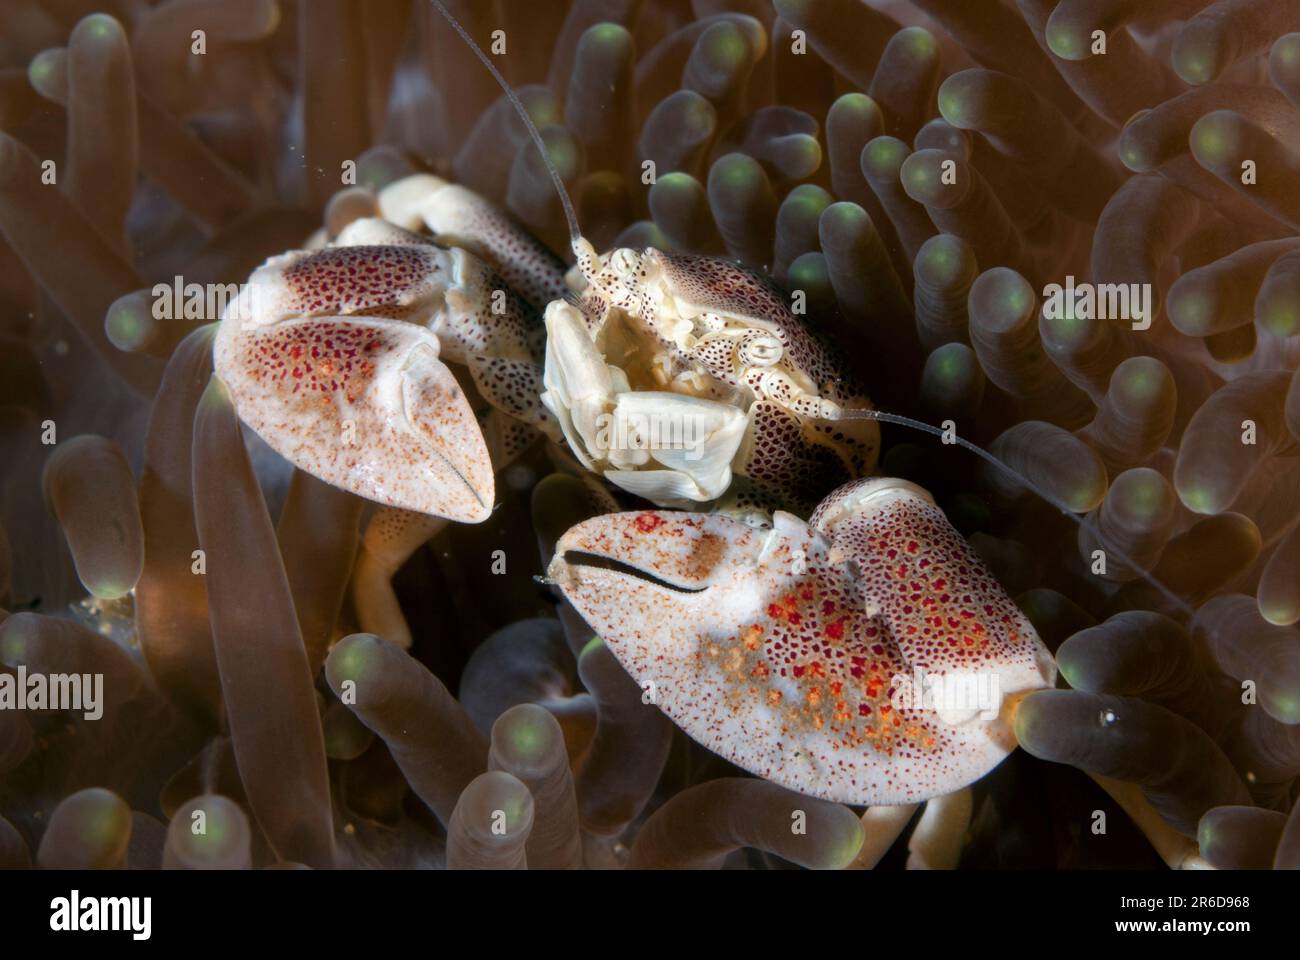 Porcelain Crab, Neopetrolisthes maculatus, on Giant Carpet Anemone, Stichodactyla gigantea, Kaino's Treasure dive site, Lembeh Straits, Sulawesi, Indo Stock Photo